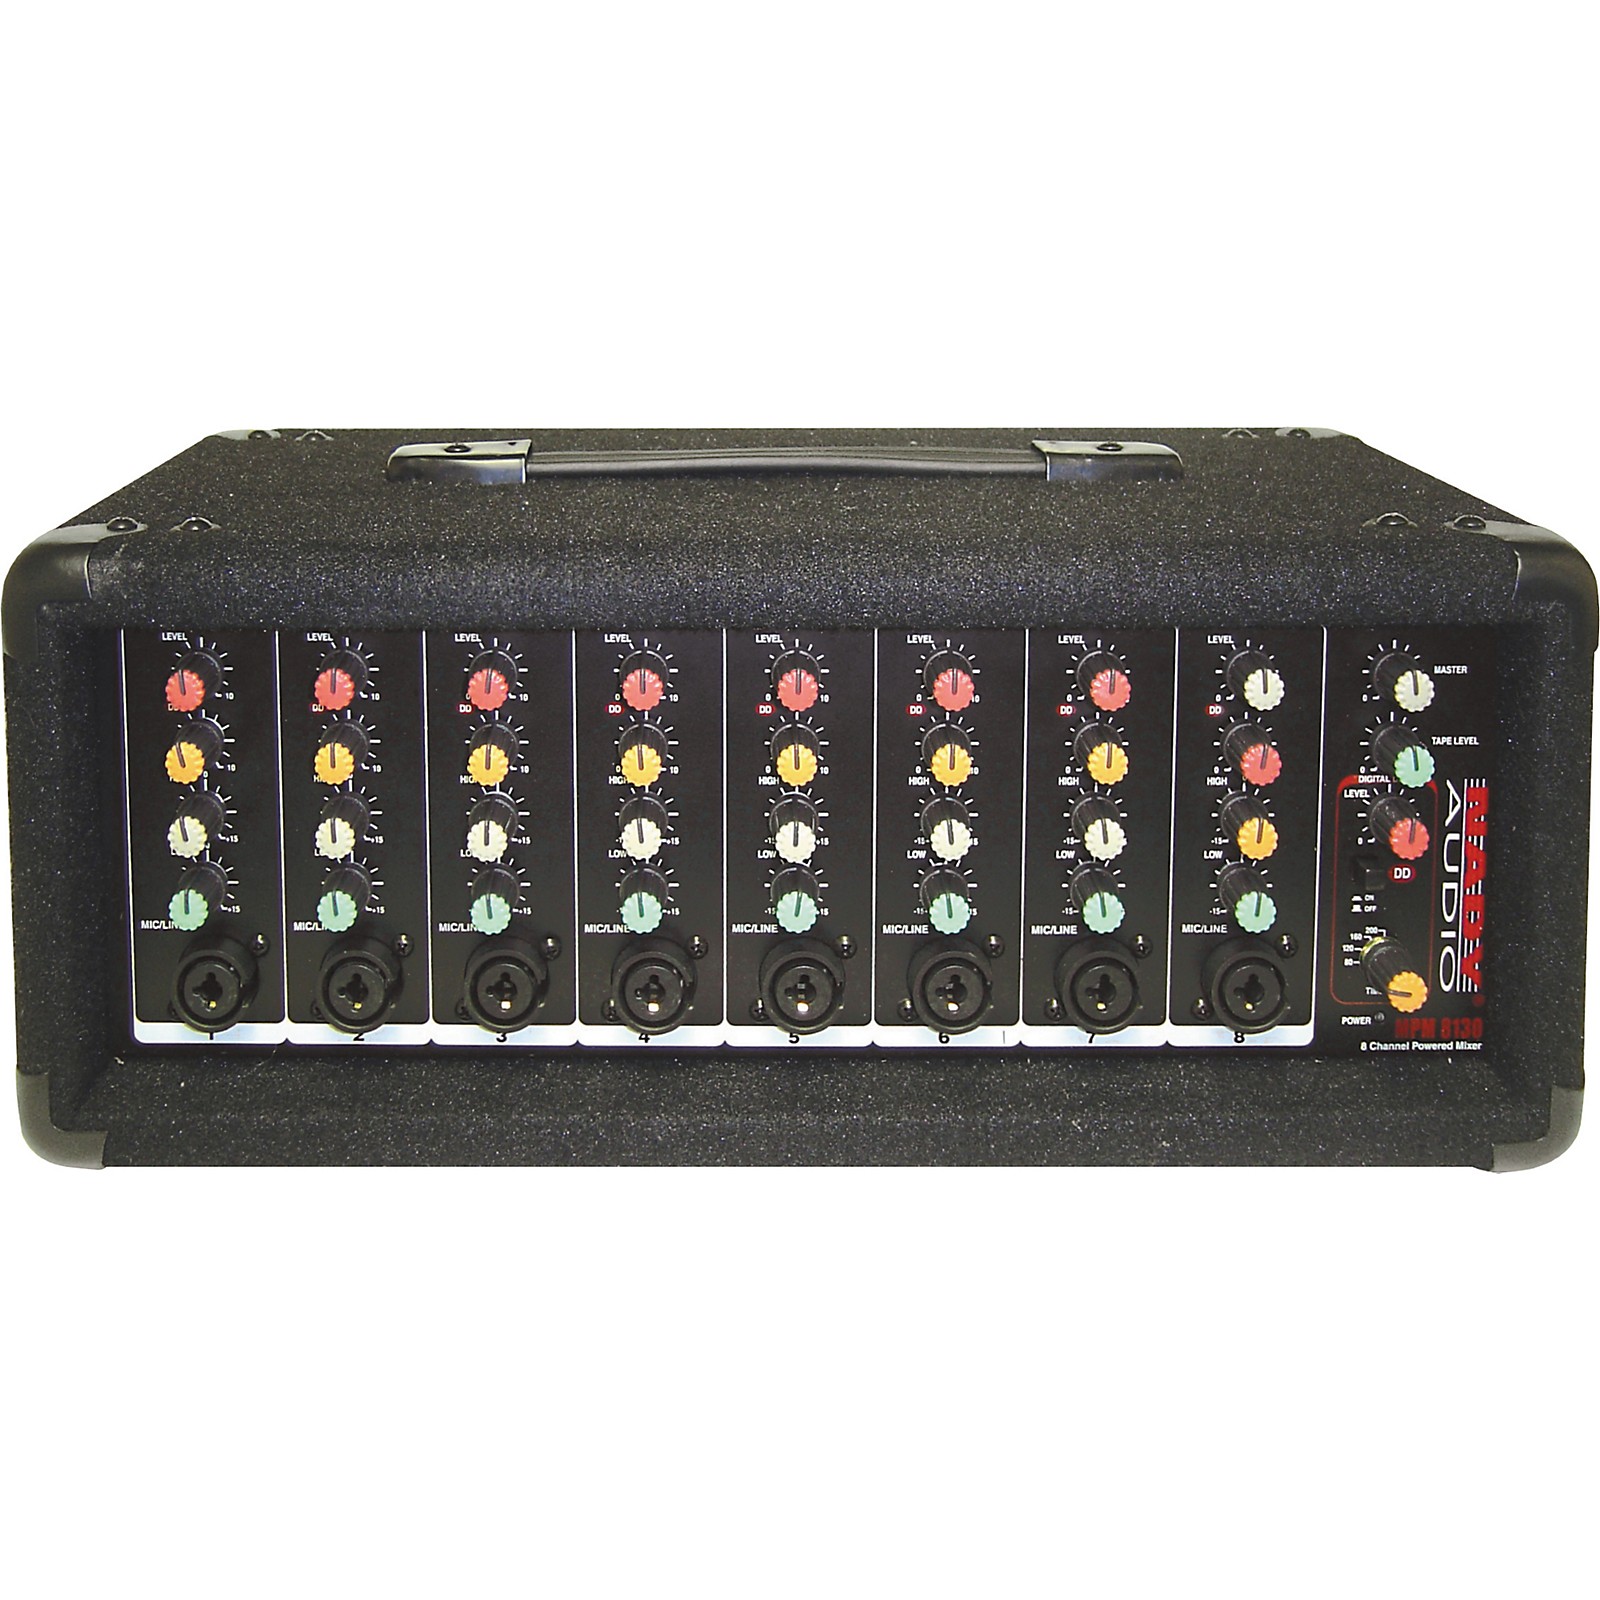 Nady MPM 8175 Powered Mixer | Musician's Friend